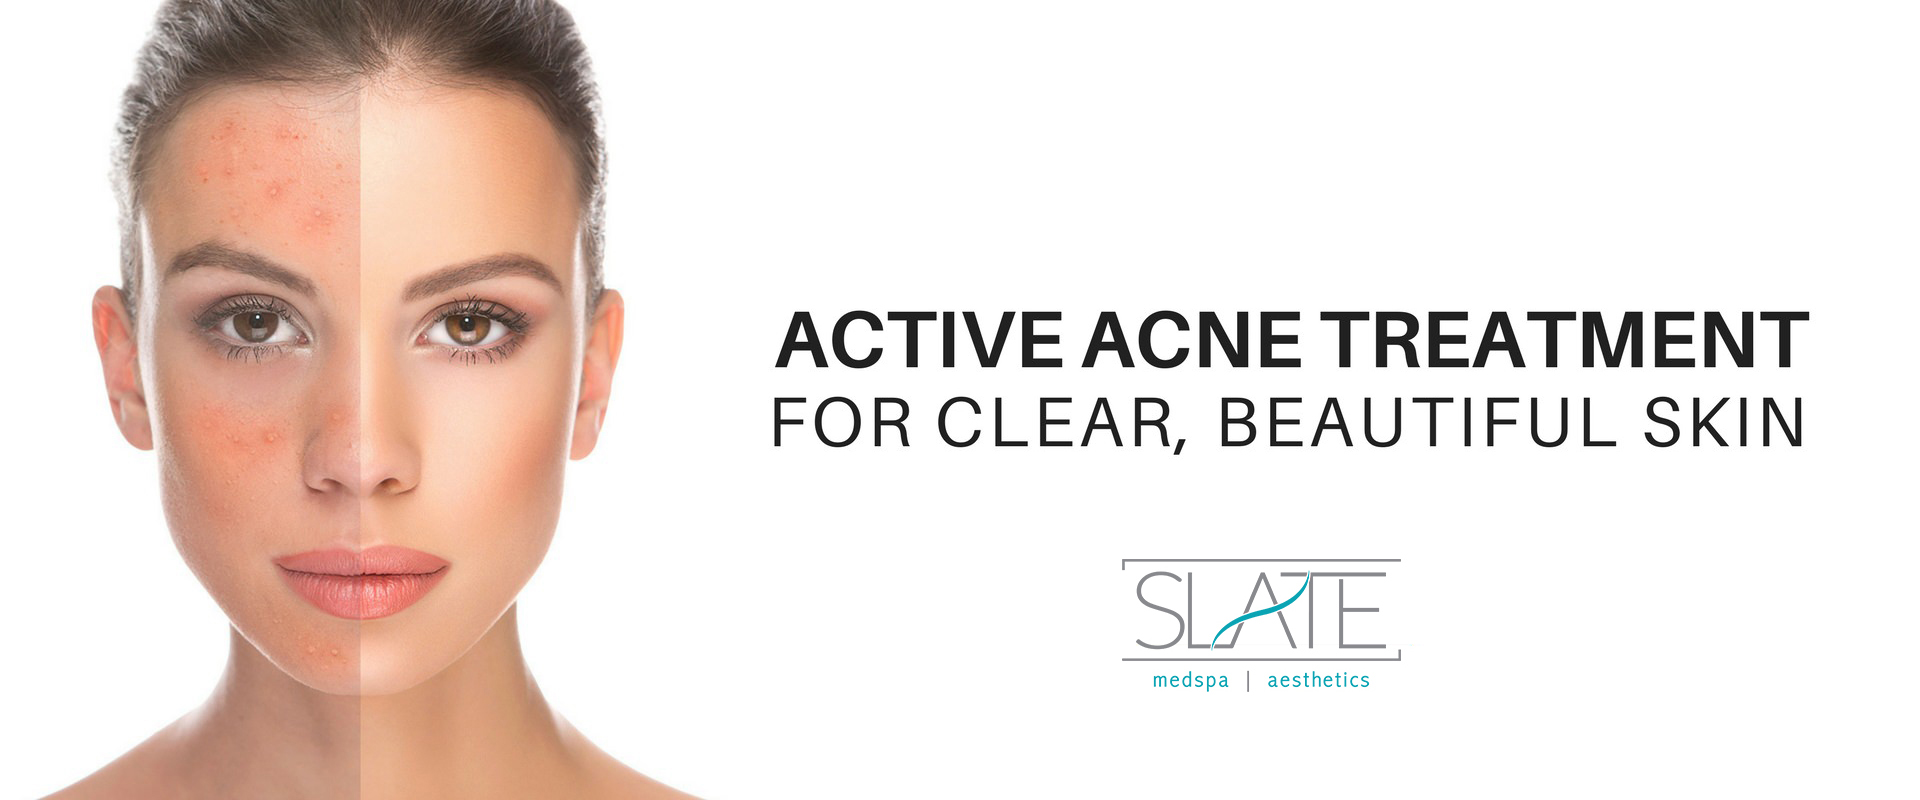 acne-treatment.slate-medspa